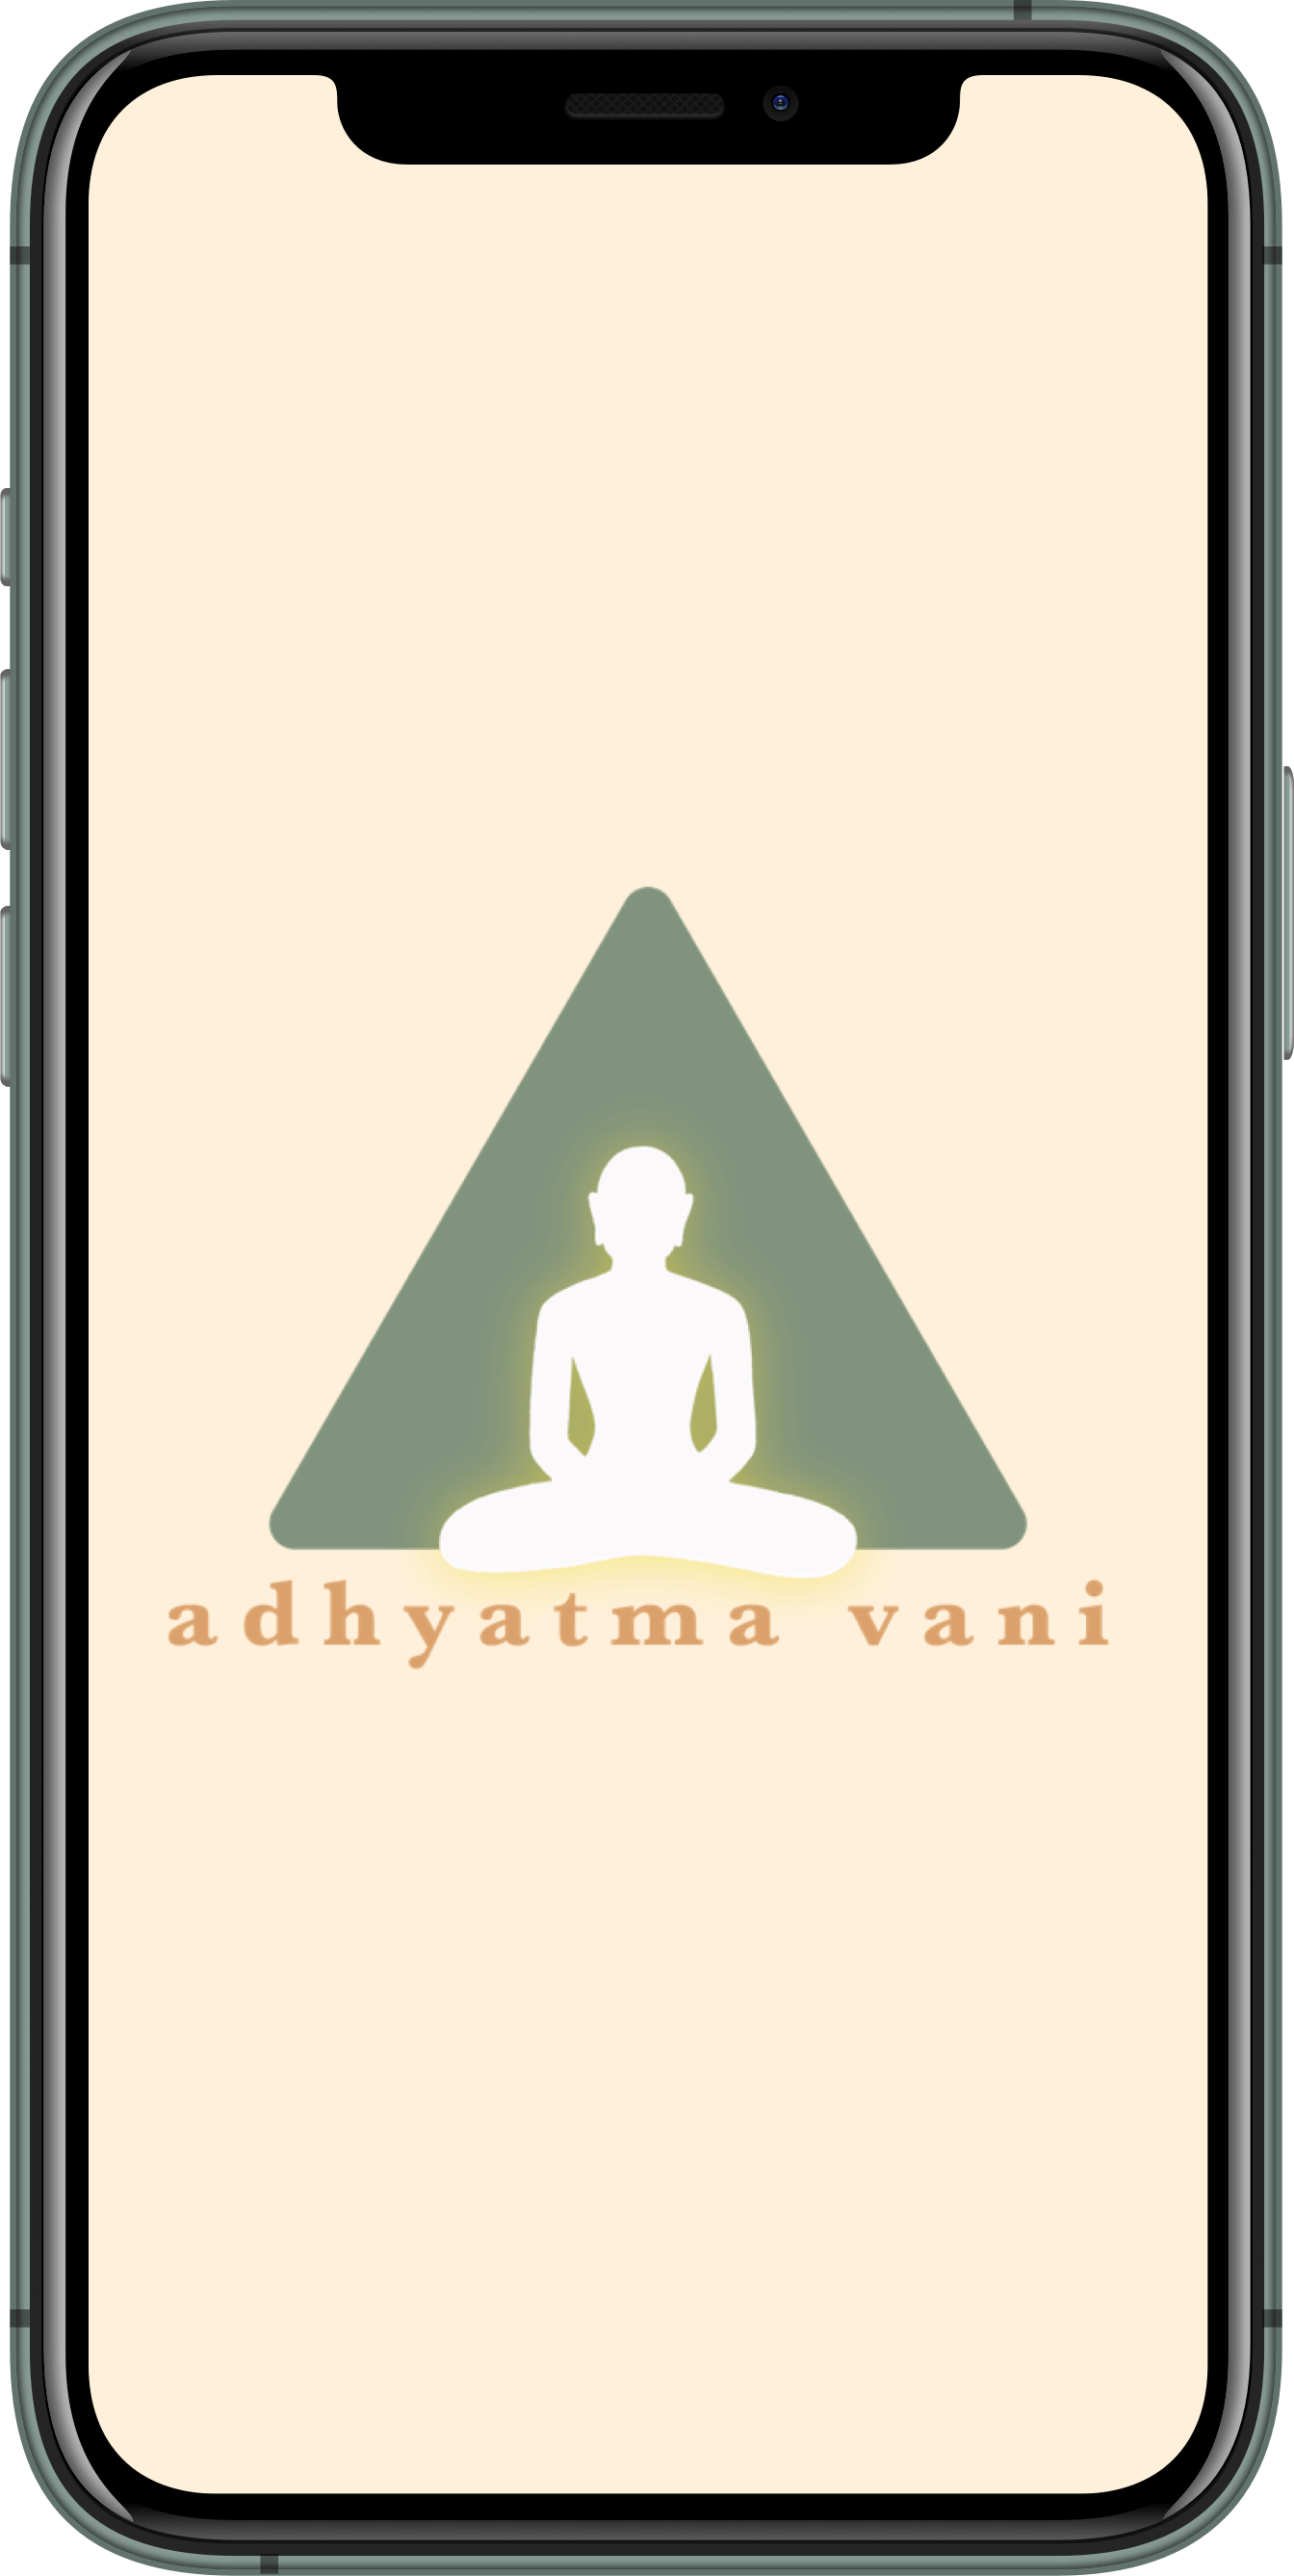 adhyatmavani-splash-screen